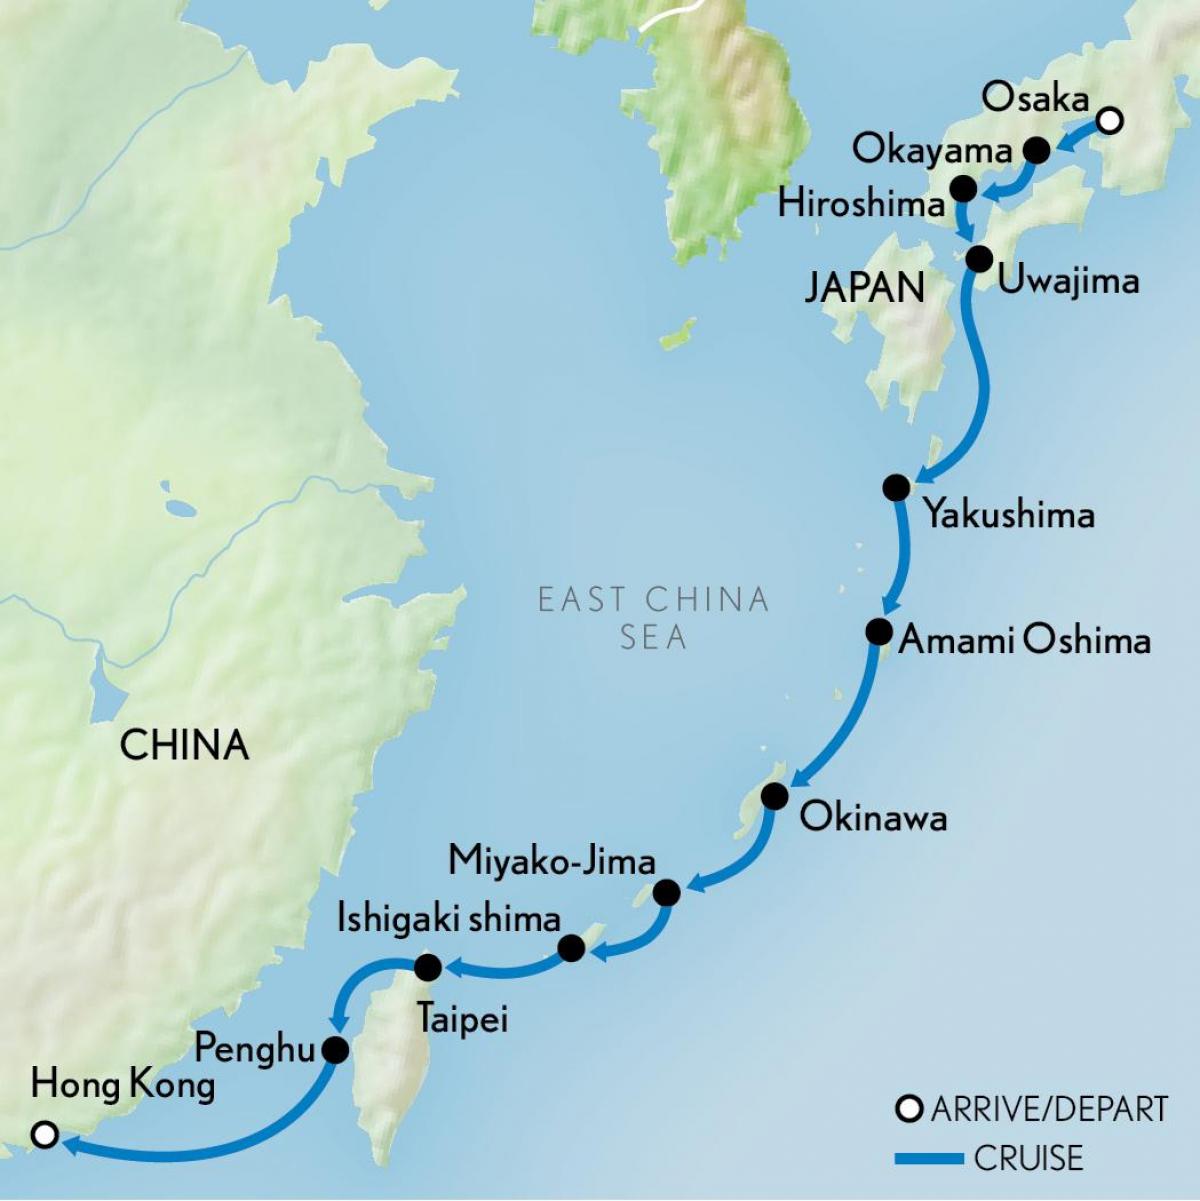 Hong Kong haritası ve Japonya